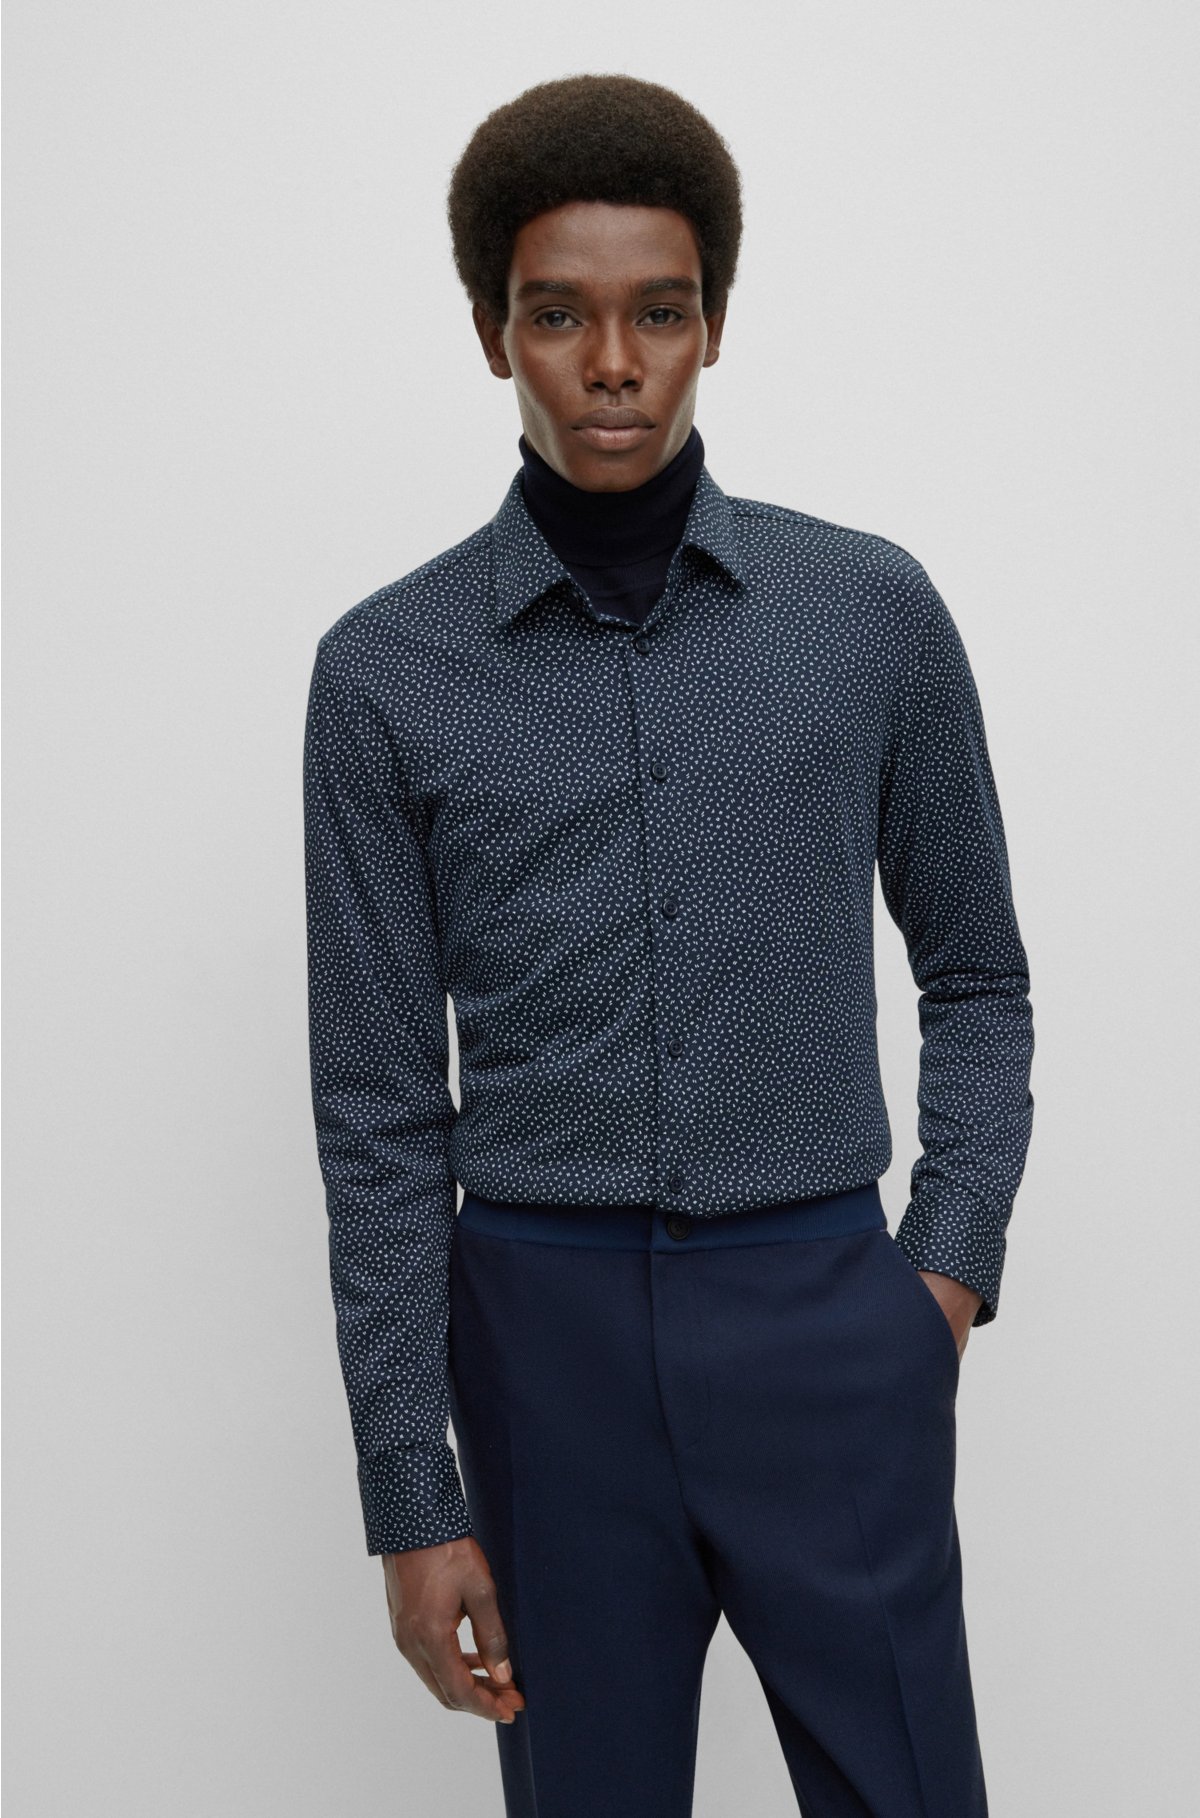 BOSS - Slim-fit shirt in printed flex-weave fabric